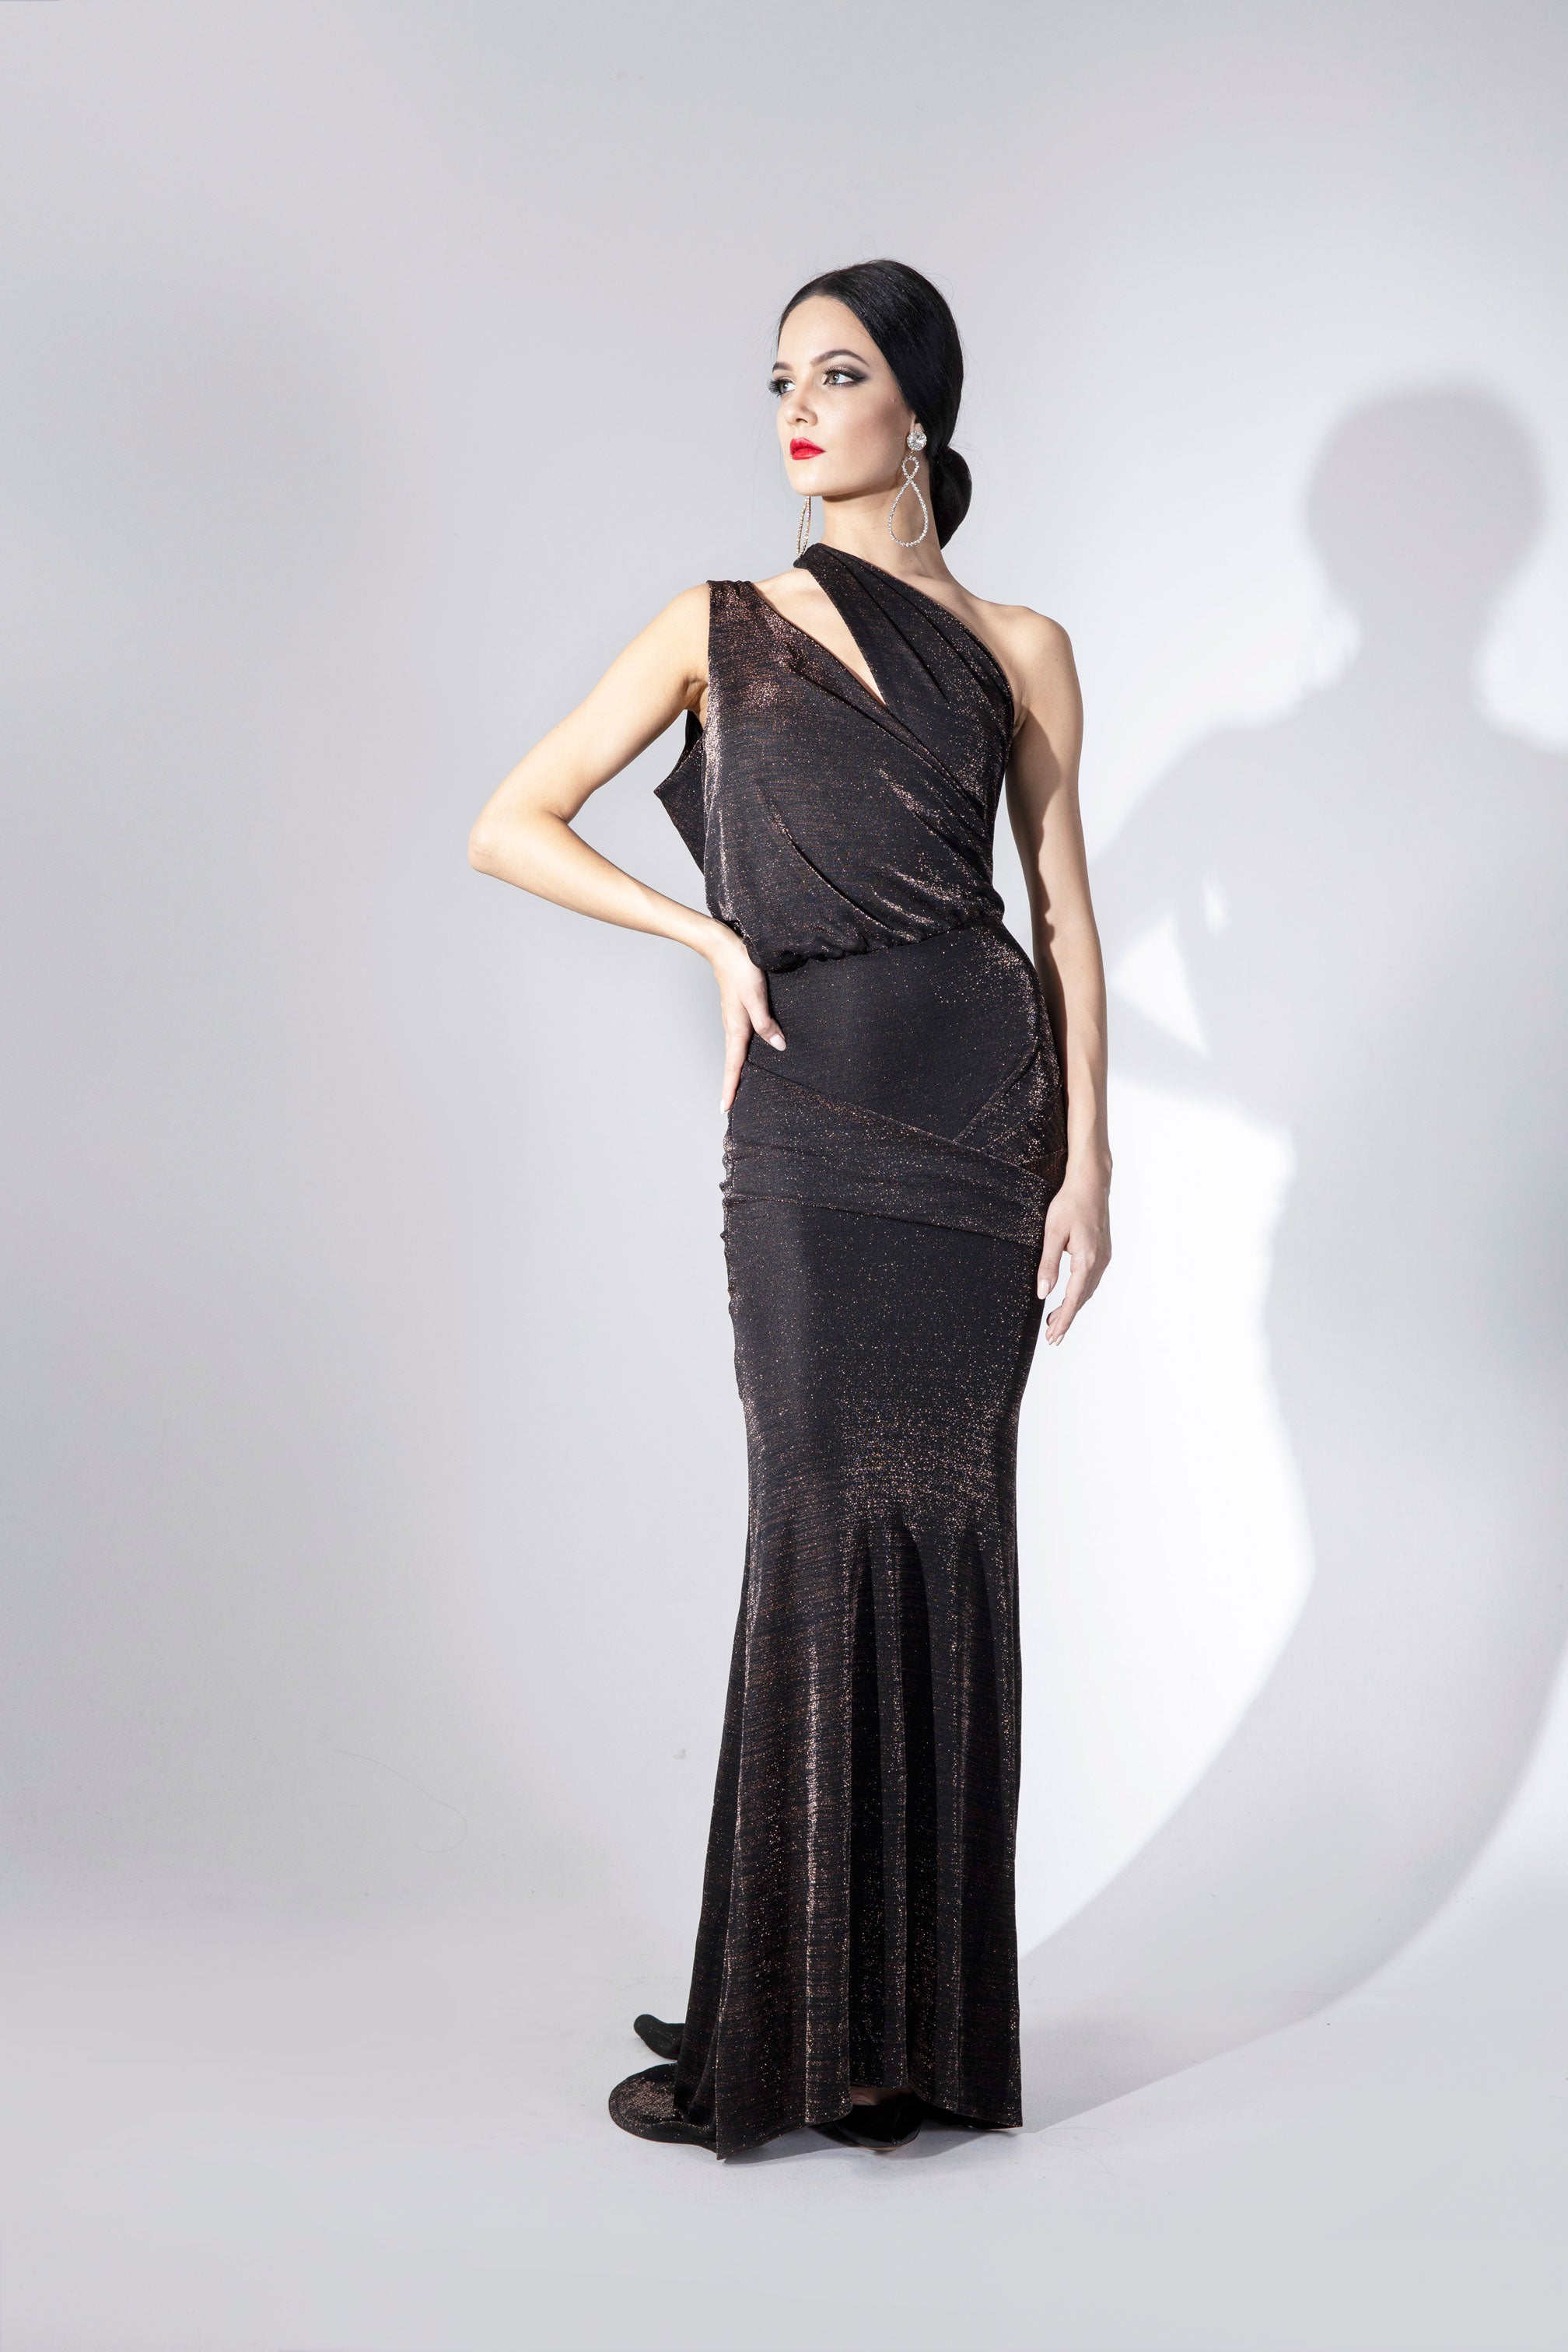 Donna Karan, Dresses, Gold Metallic Donna Karan Gown Size 6